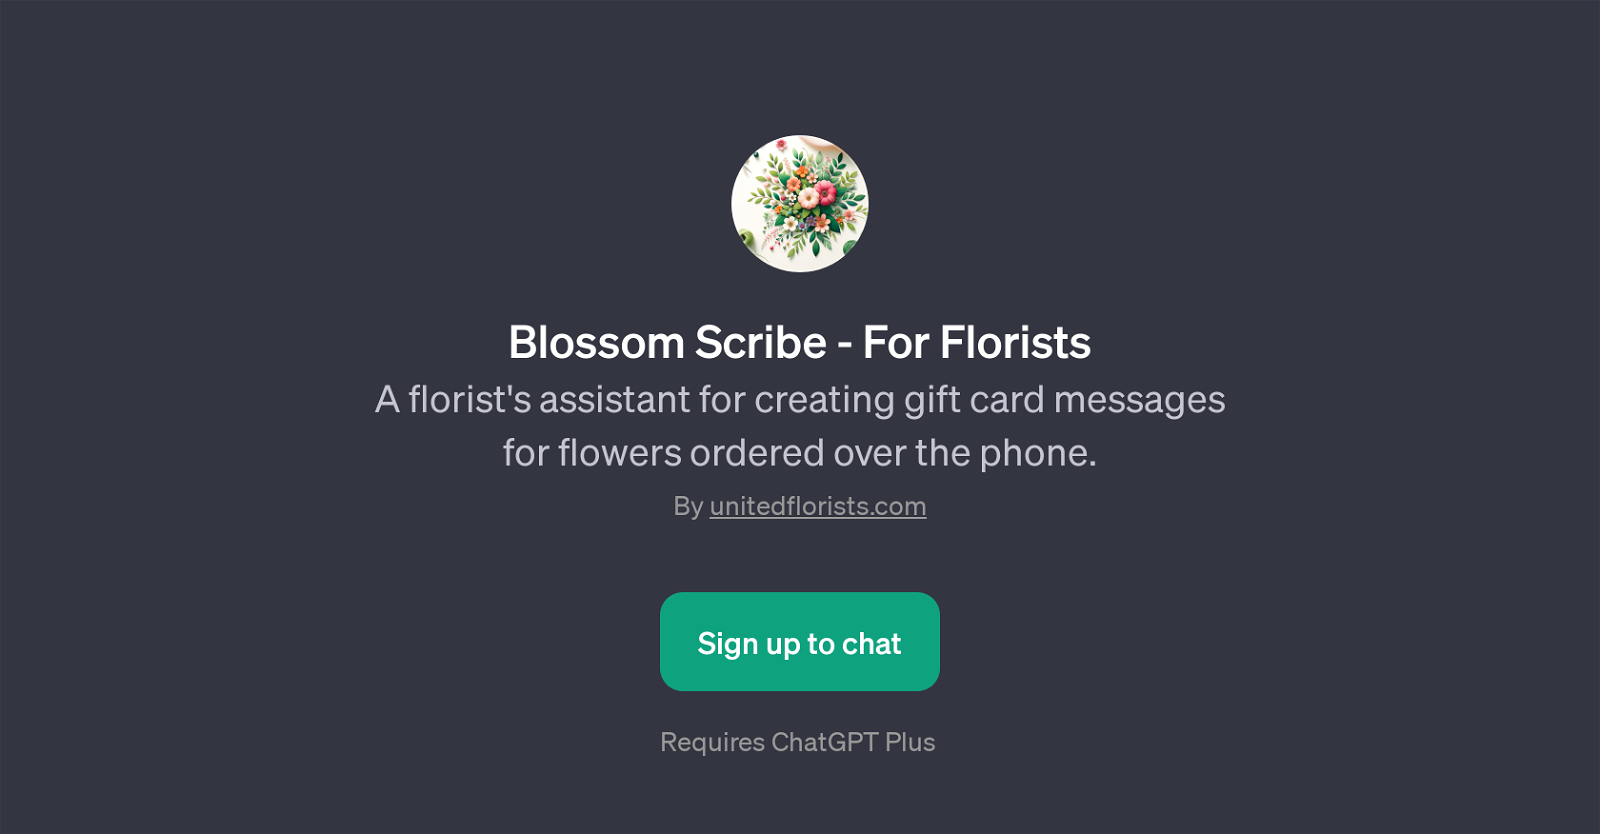 Blossom Scribe - For Florists website